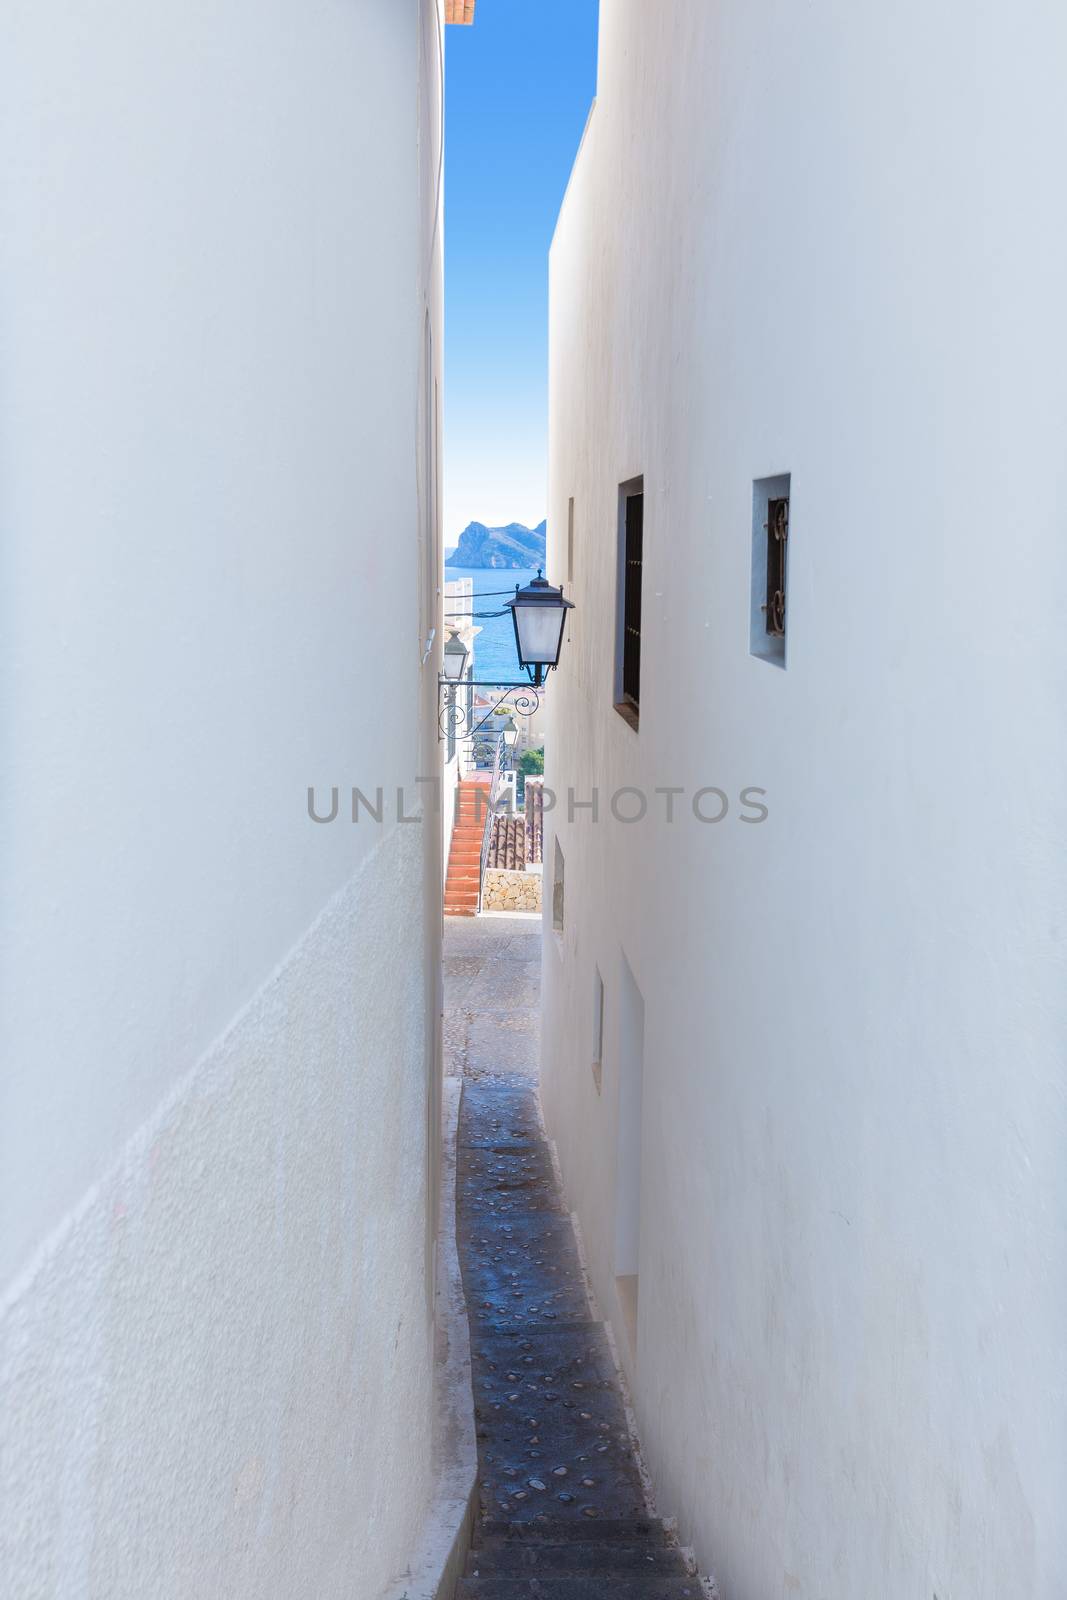 Altea old village white narrow street typical Mediterranean at Alicante Spain